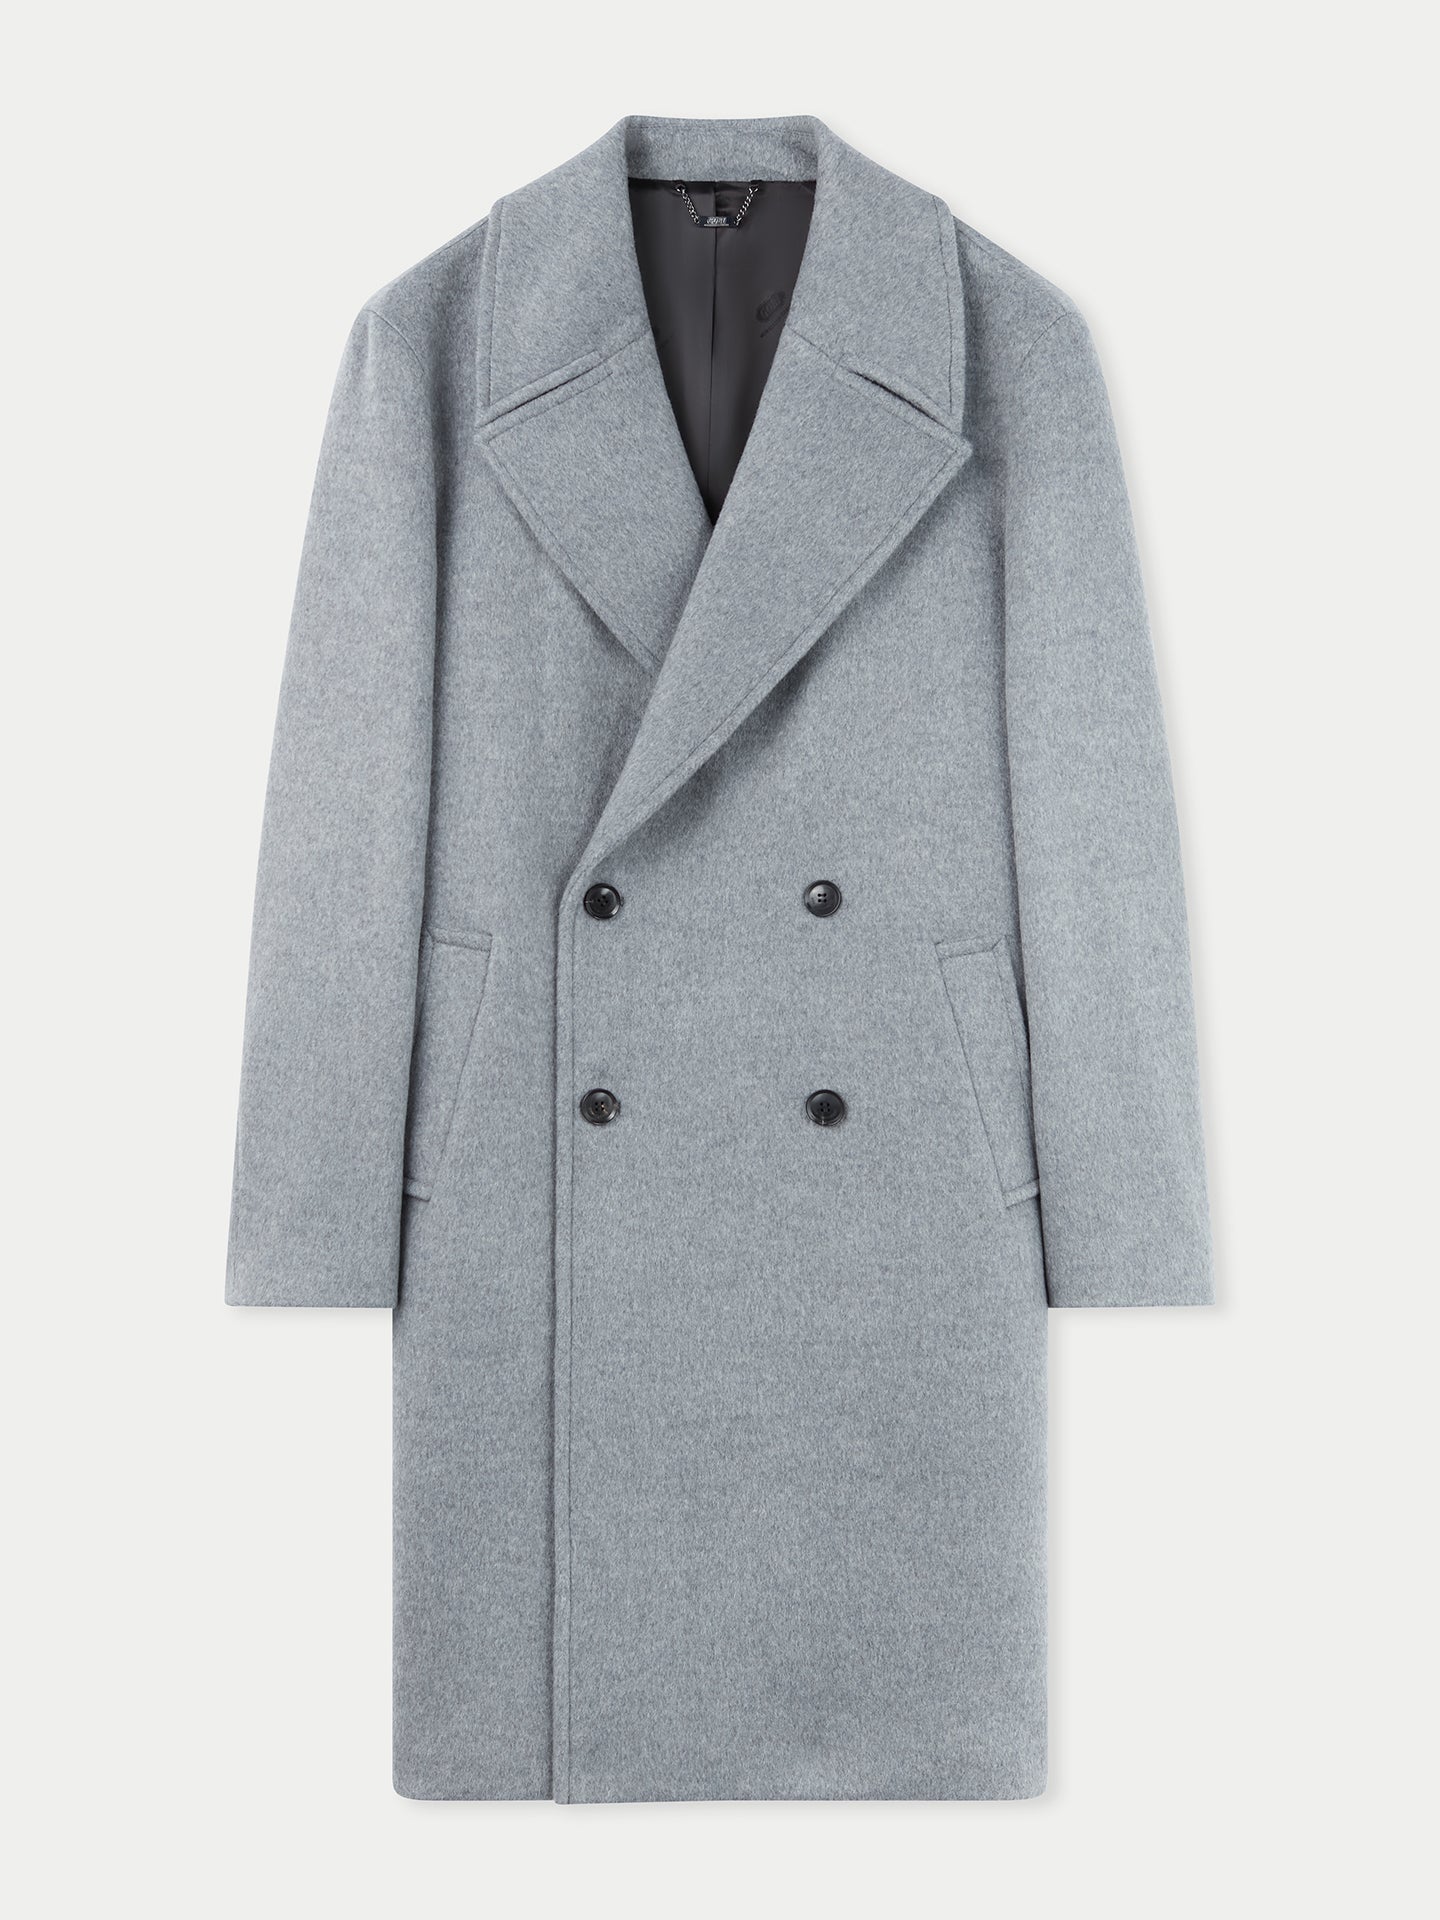 GOBI Double-Breasted Men’s Cashmere Coat - Giorgio Spina Collection  Dim Gray - Gobi Cashmere 